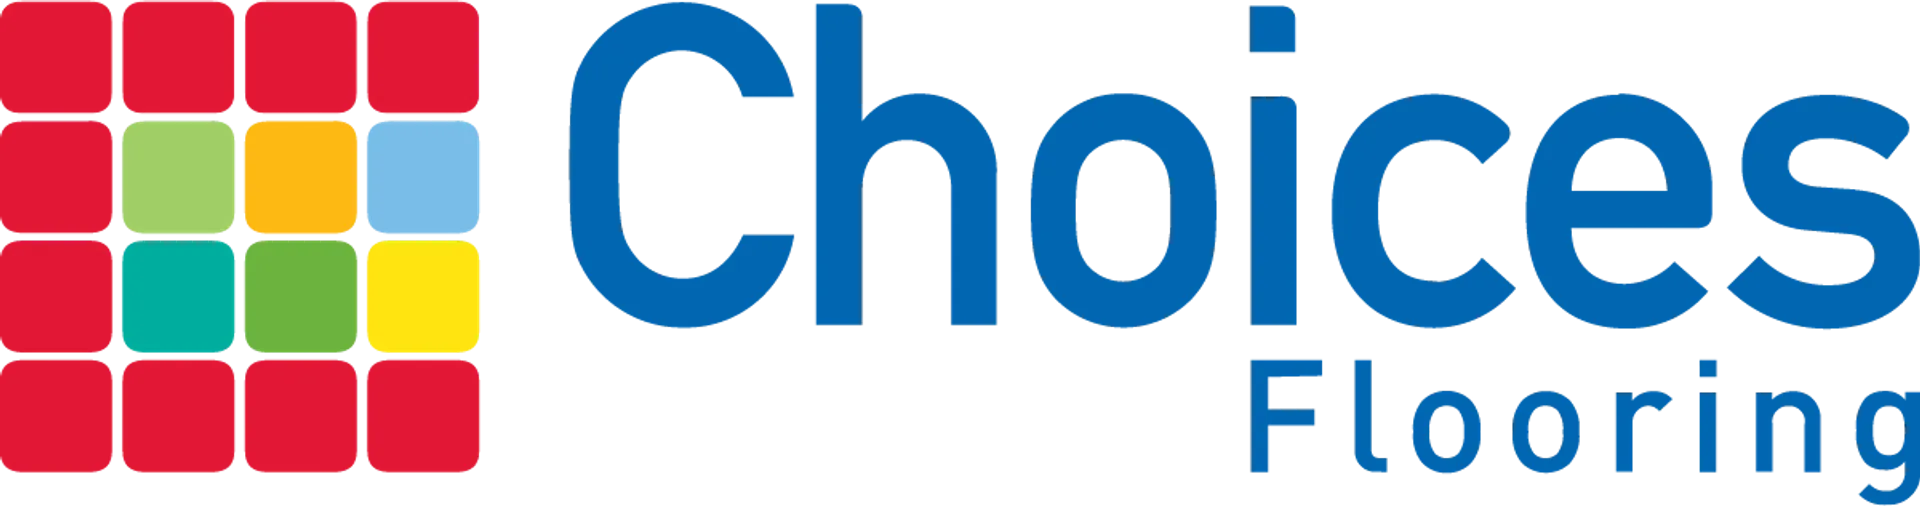 CHOICES FLOORING logo